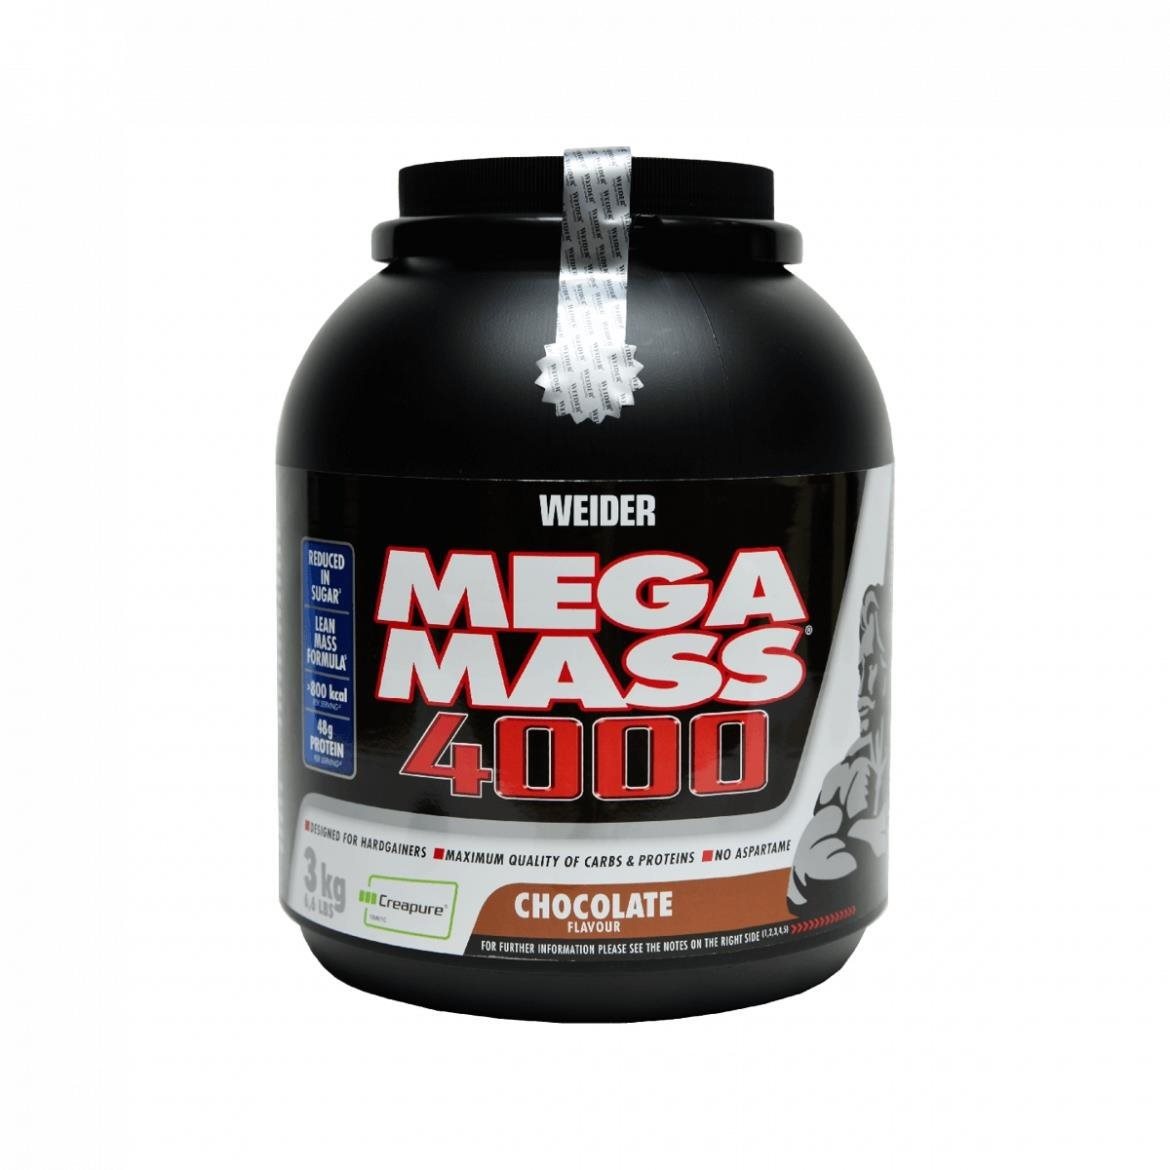 Weider Mega Mass 4000 on sale at